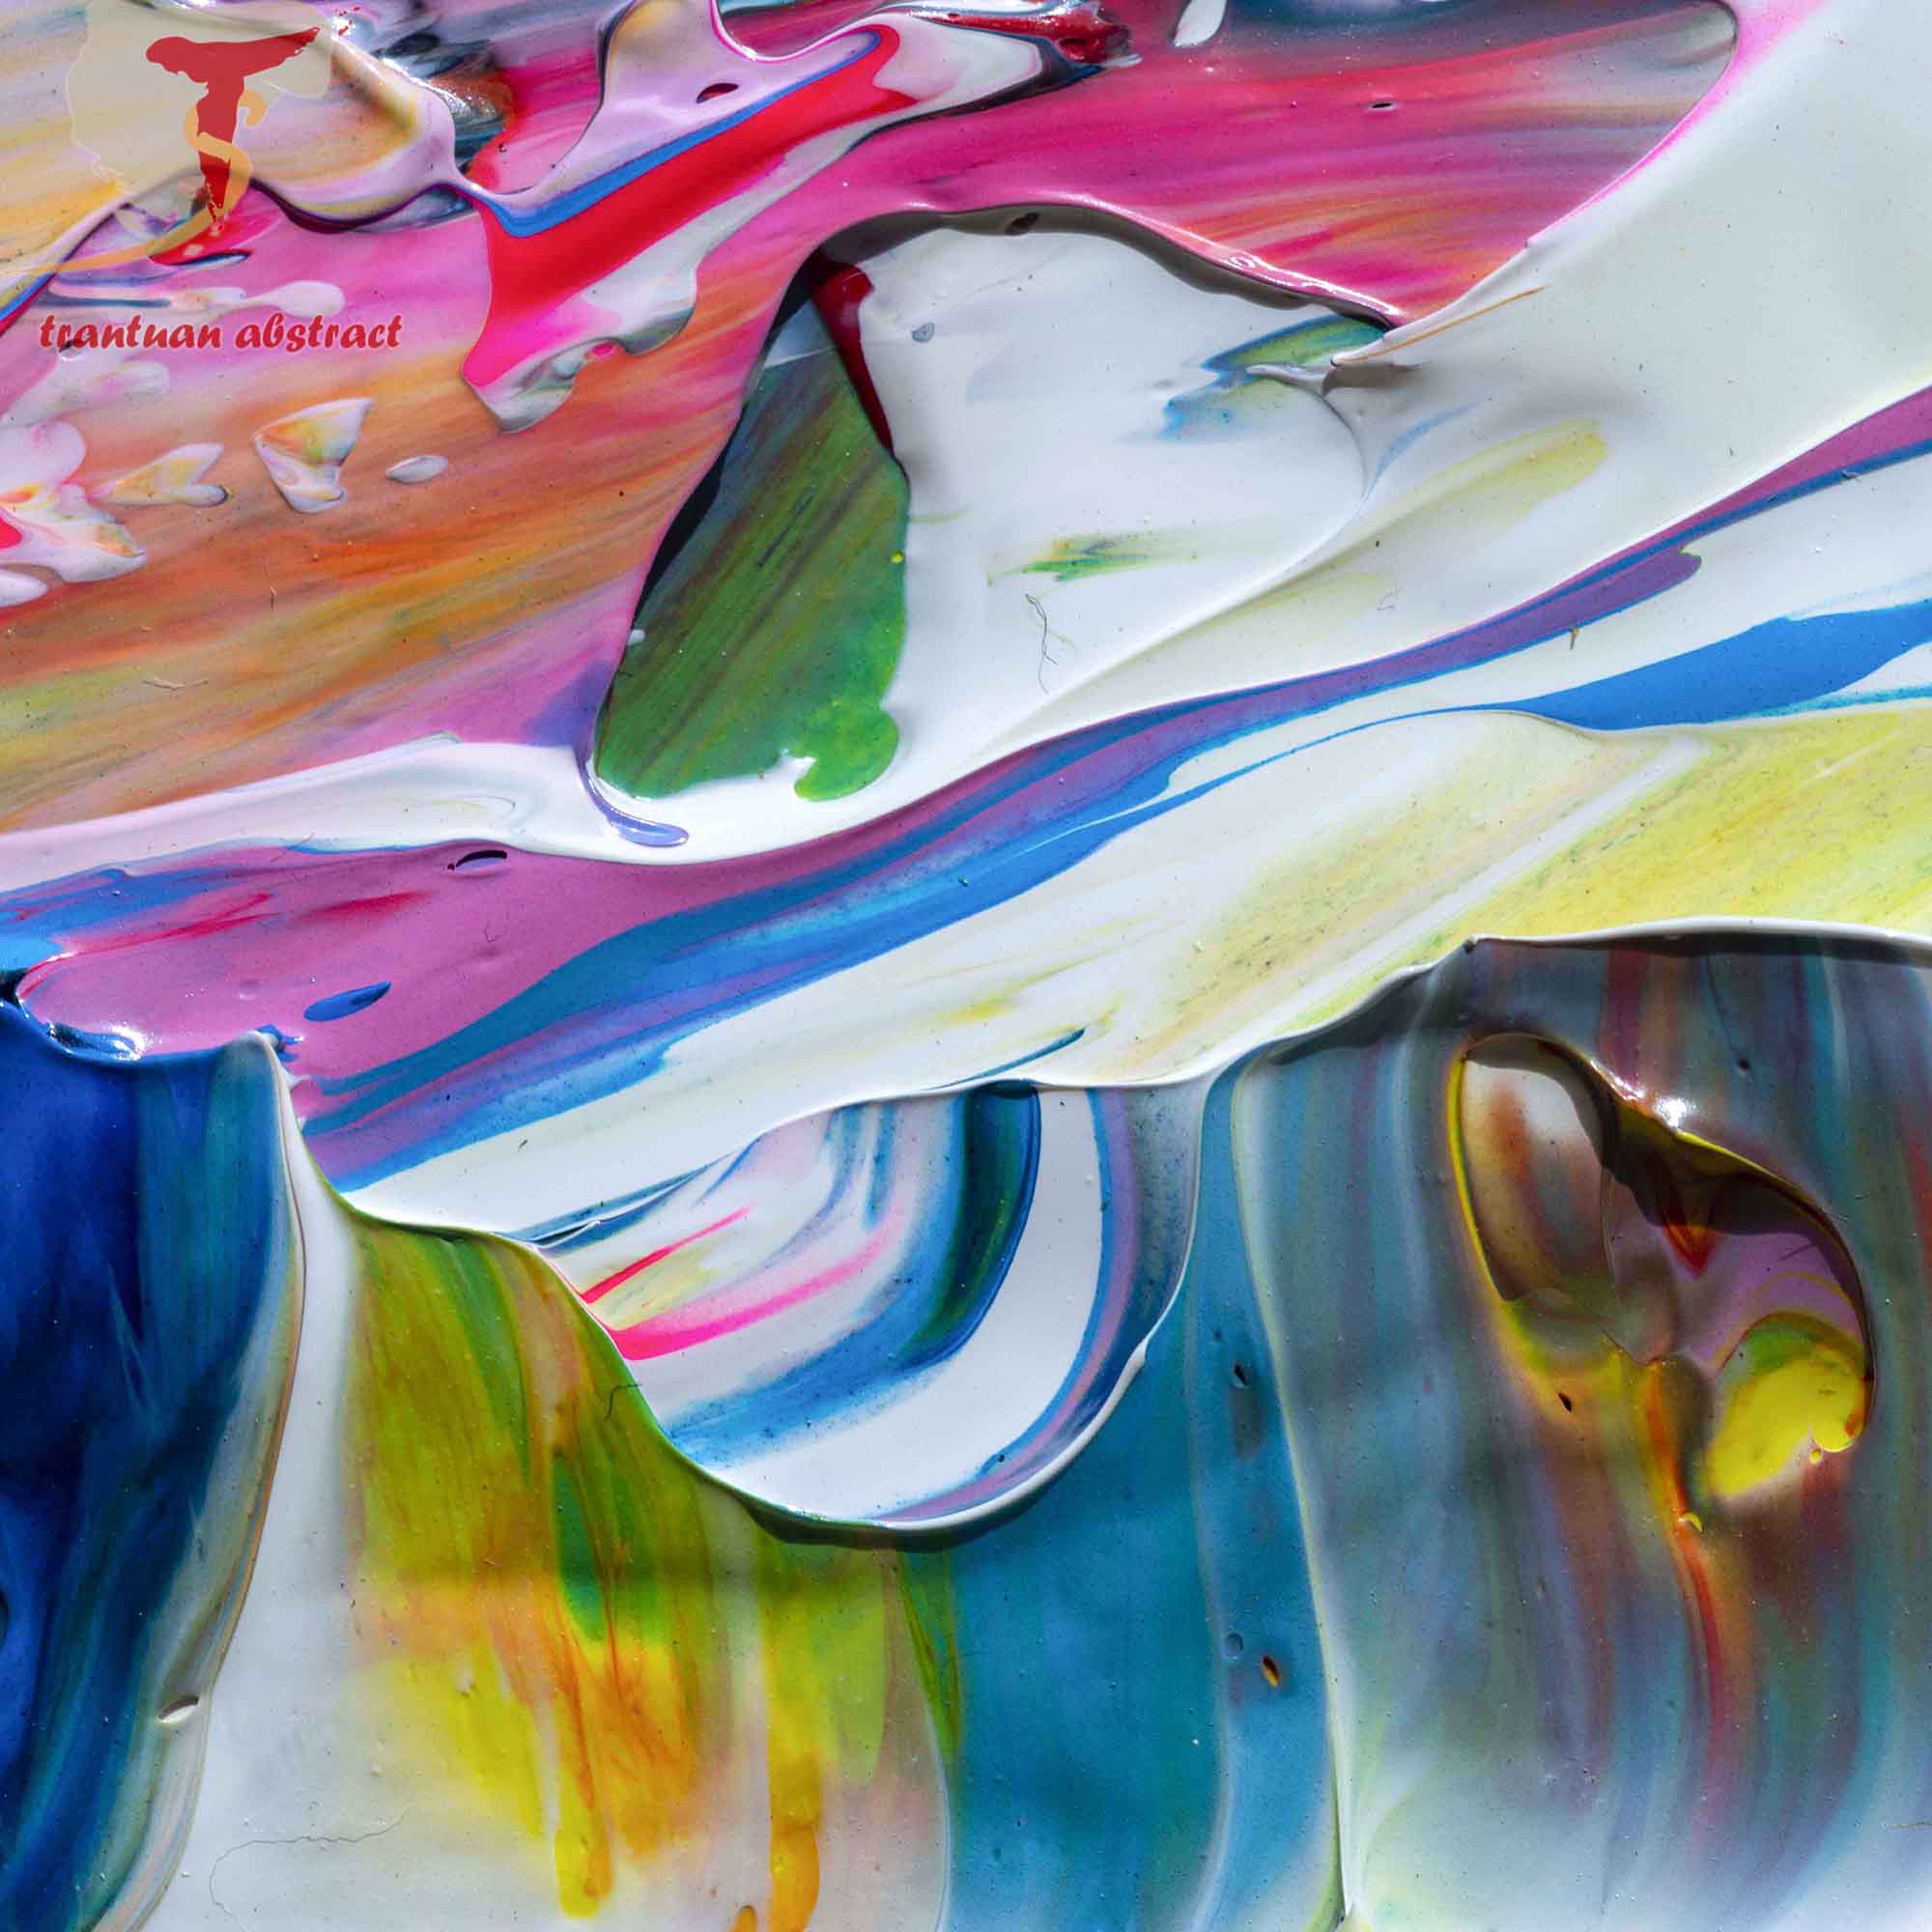 Tran Tuan Abstract Sleepwalking 120 x 100 x 3 cm Acrylic on Canvas Painting Detail s (33)